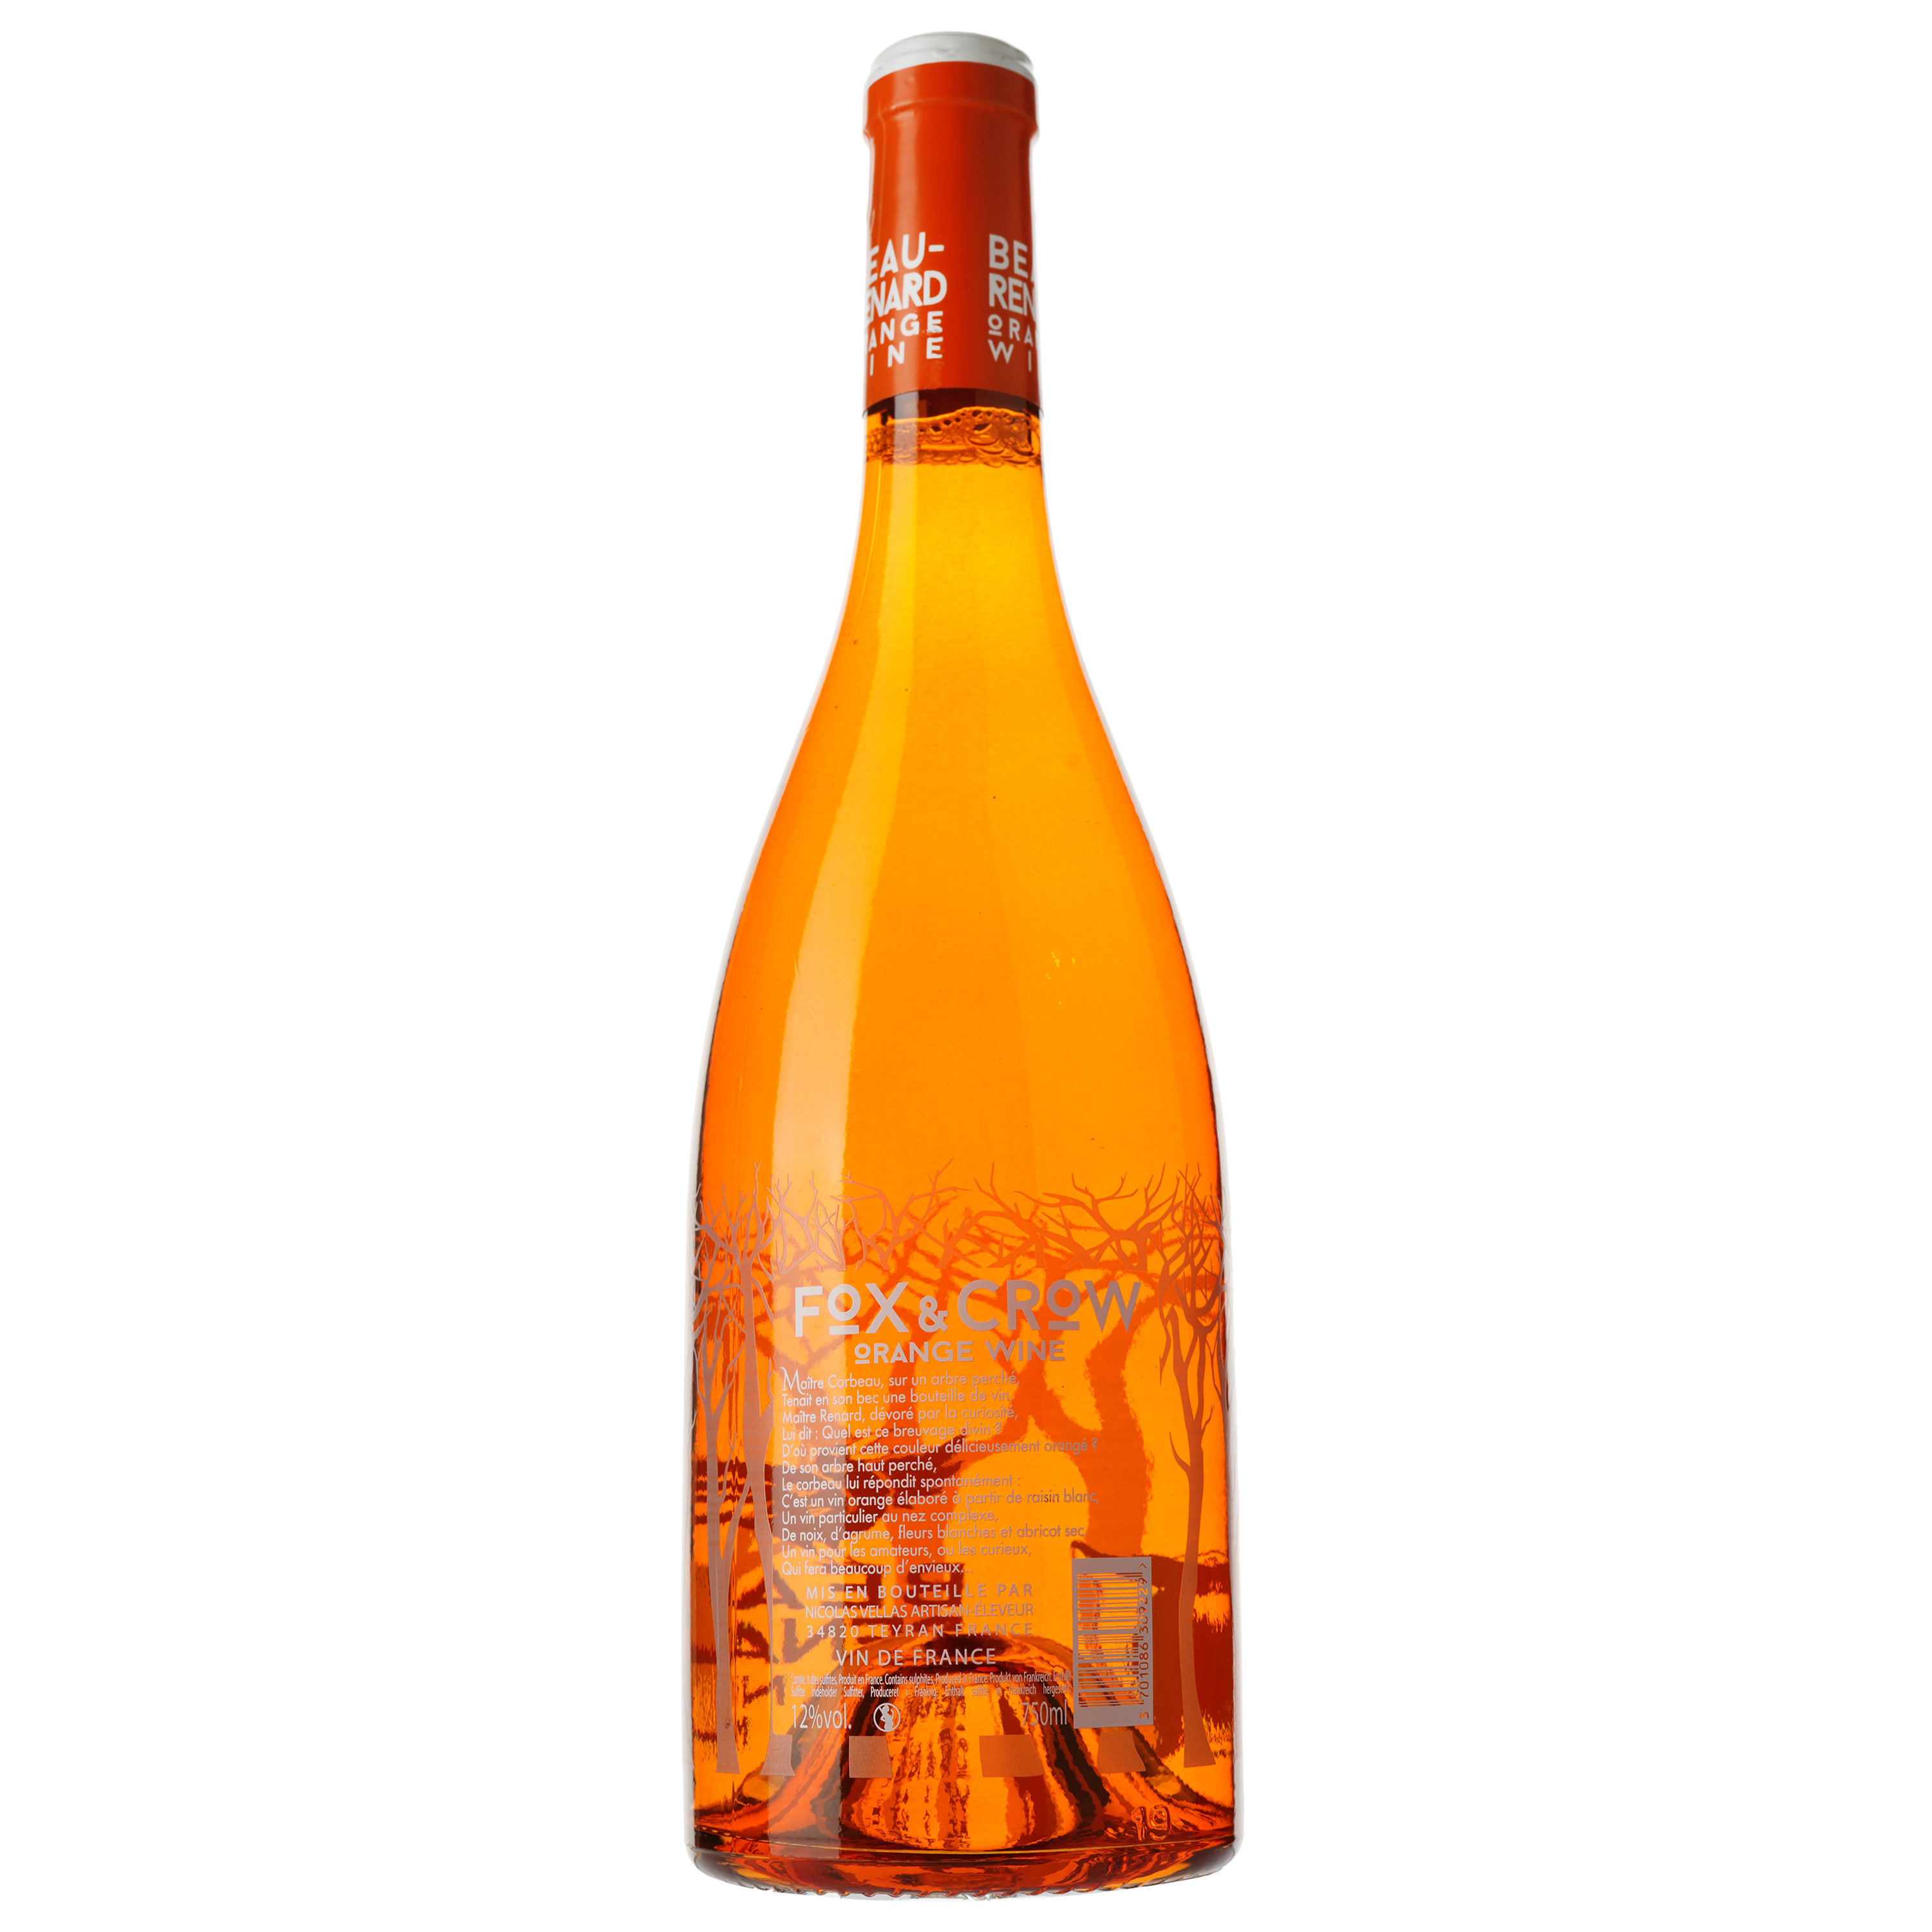 Вино Fox & Crow Orange Wine Vin de France, біле, сухе, 0,75 л - фото 2